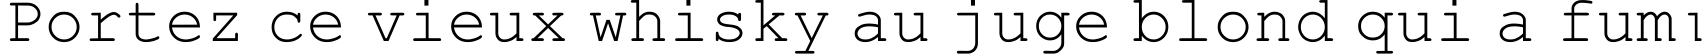 Пример написания шрифтом HellasCour текста на французском